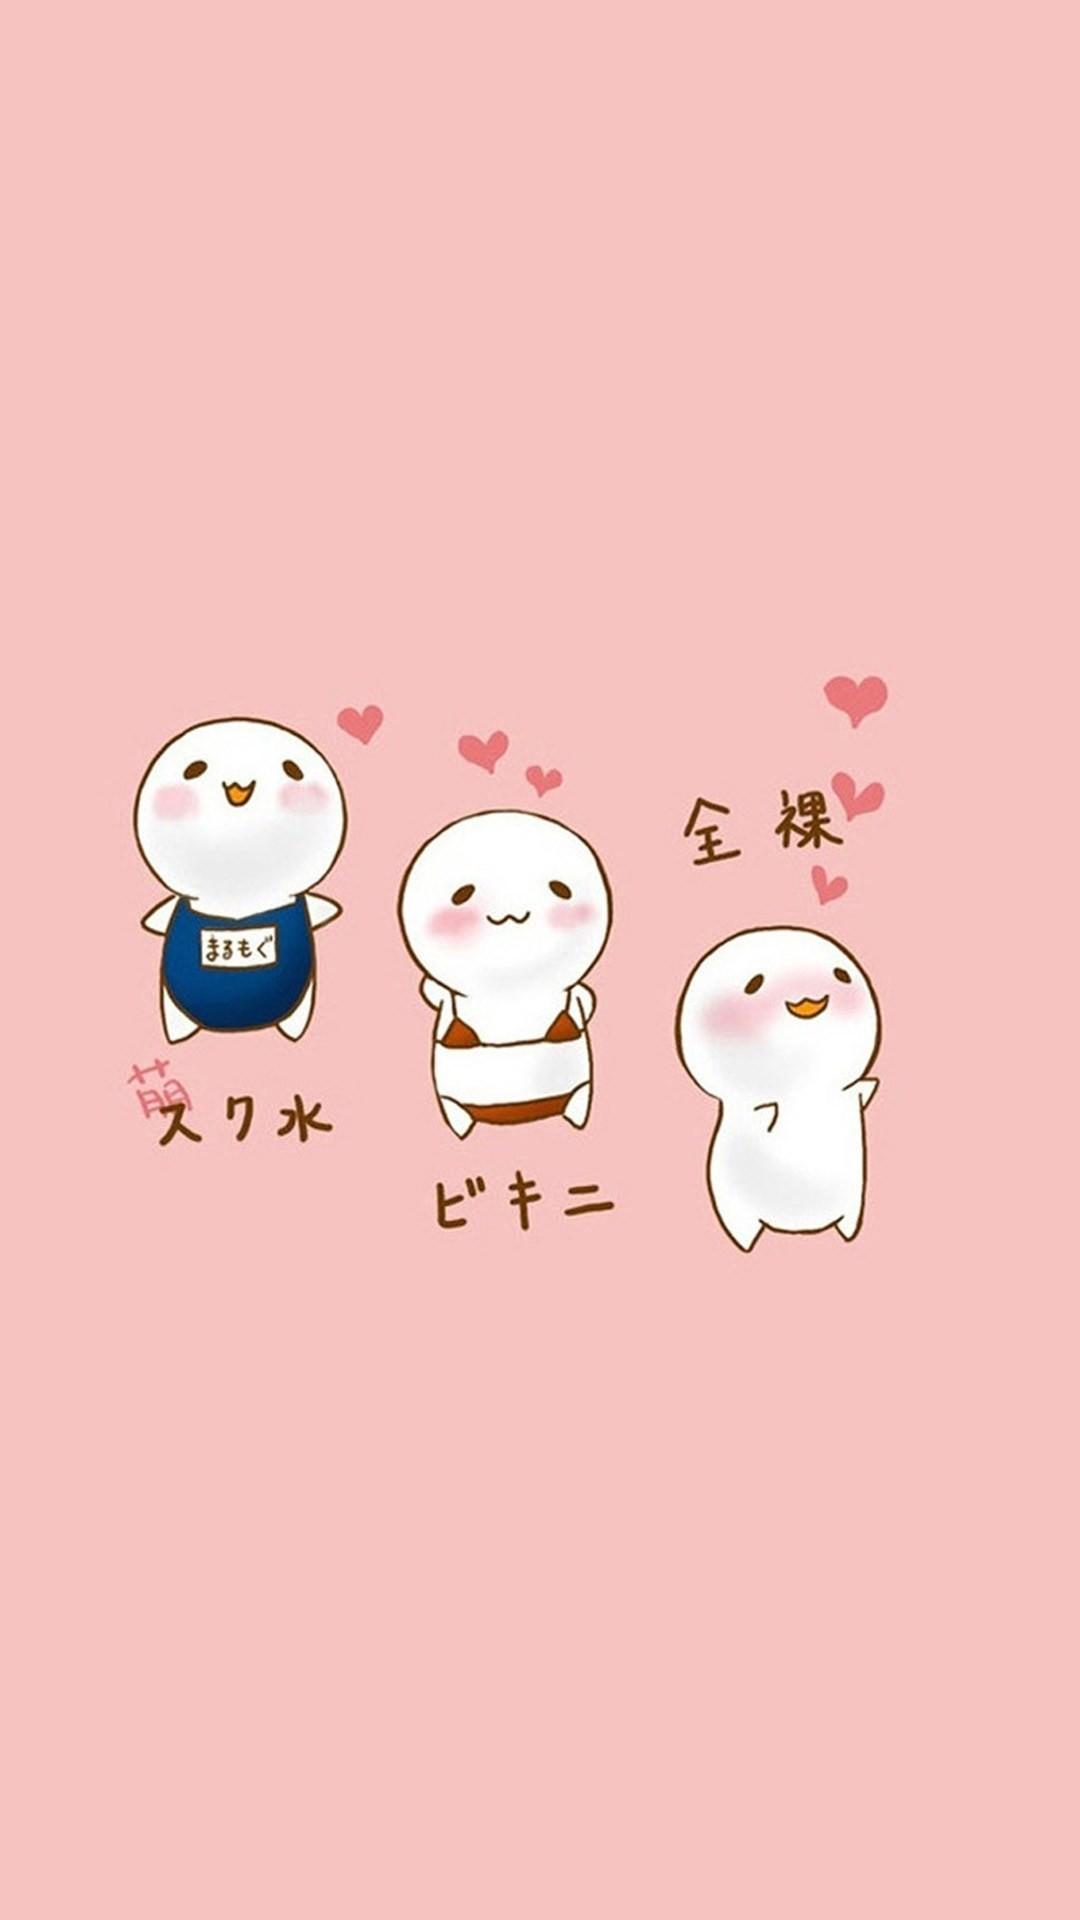 Three cute little animals with hearts on their heads - Kawaii